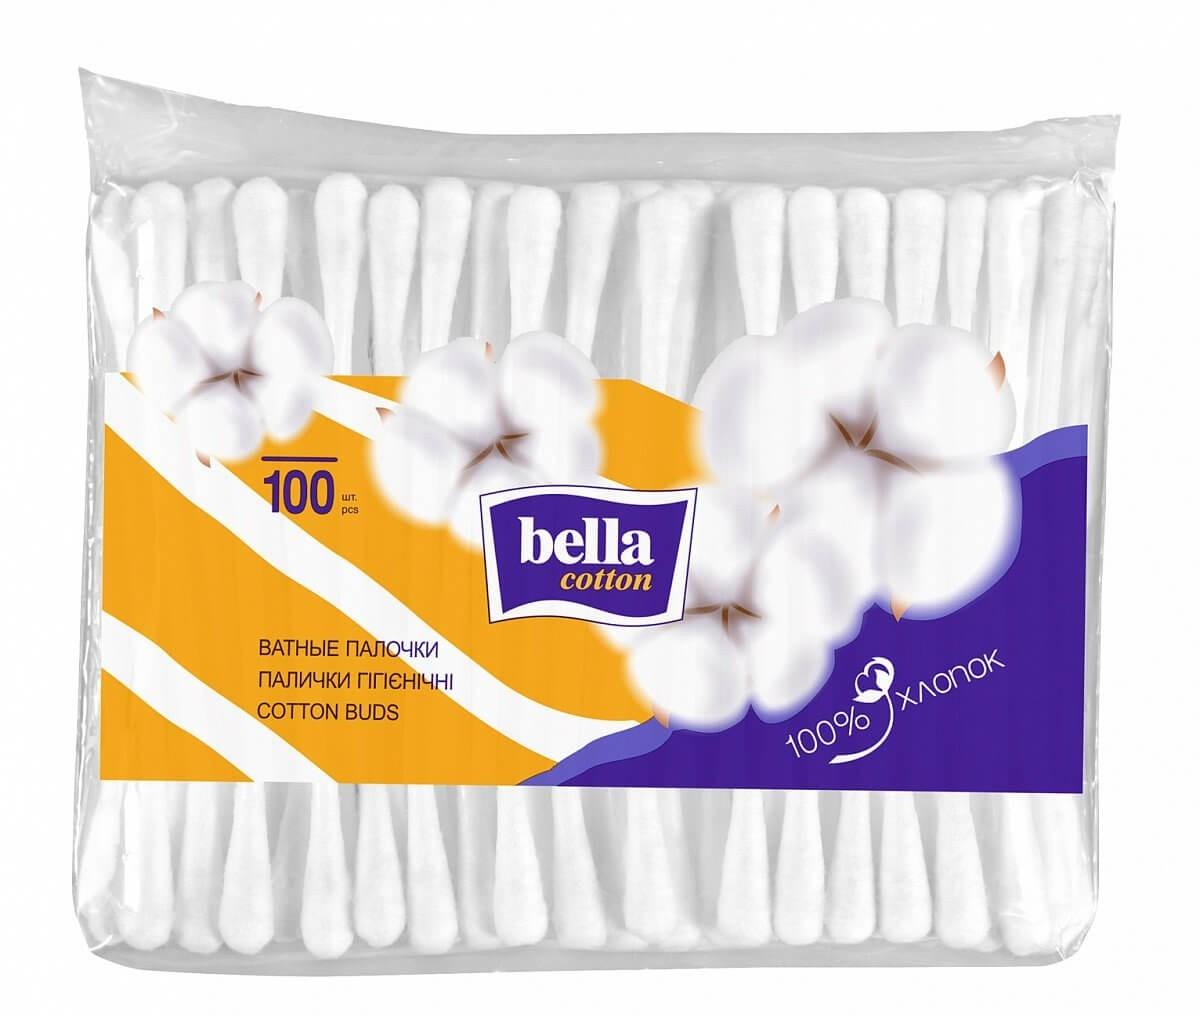 Ватные палочки Bella cotton 100 шт., флоу-пак